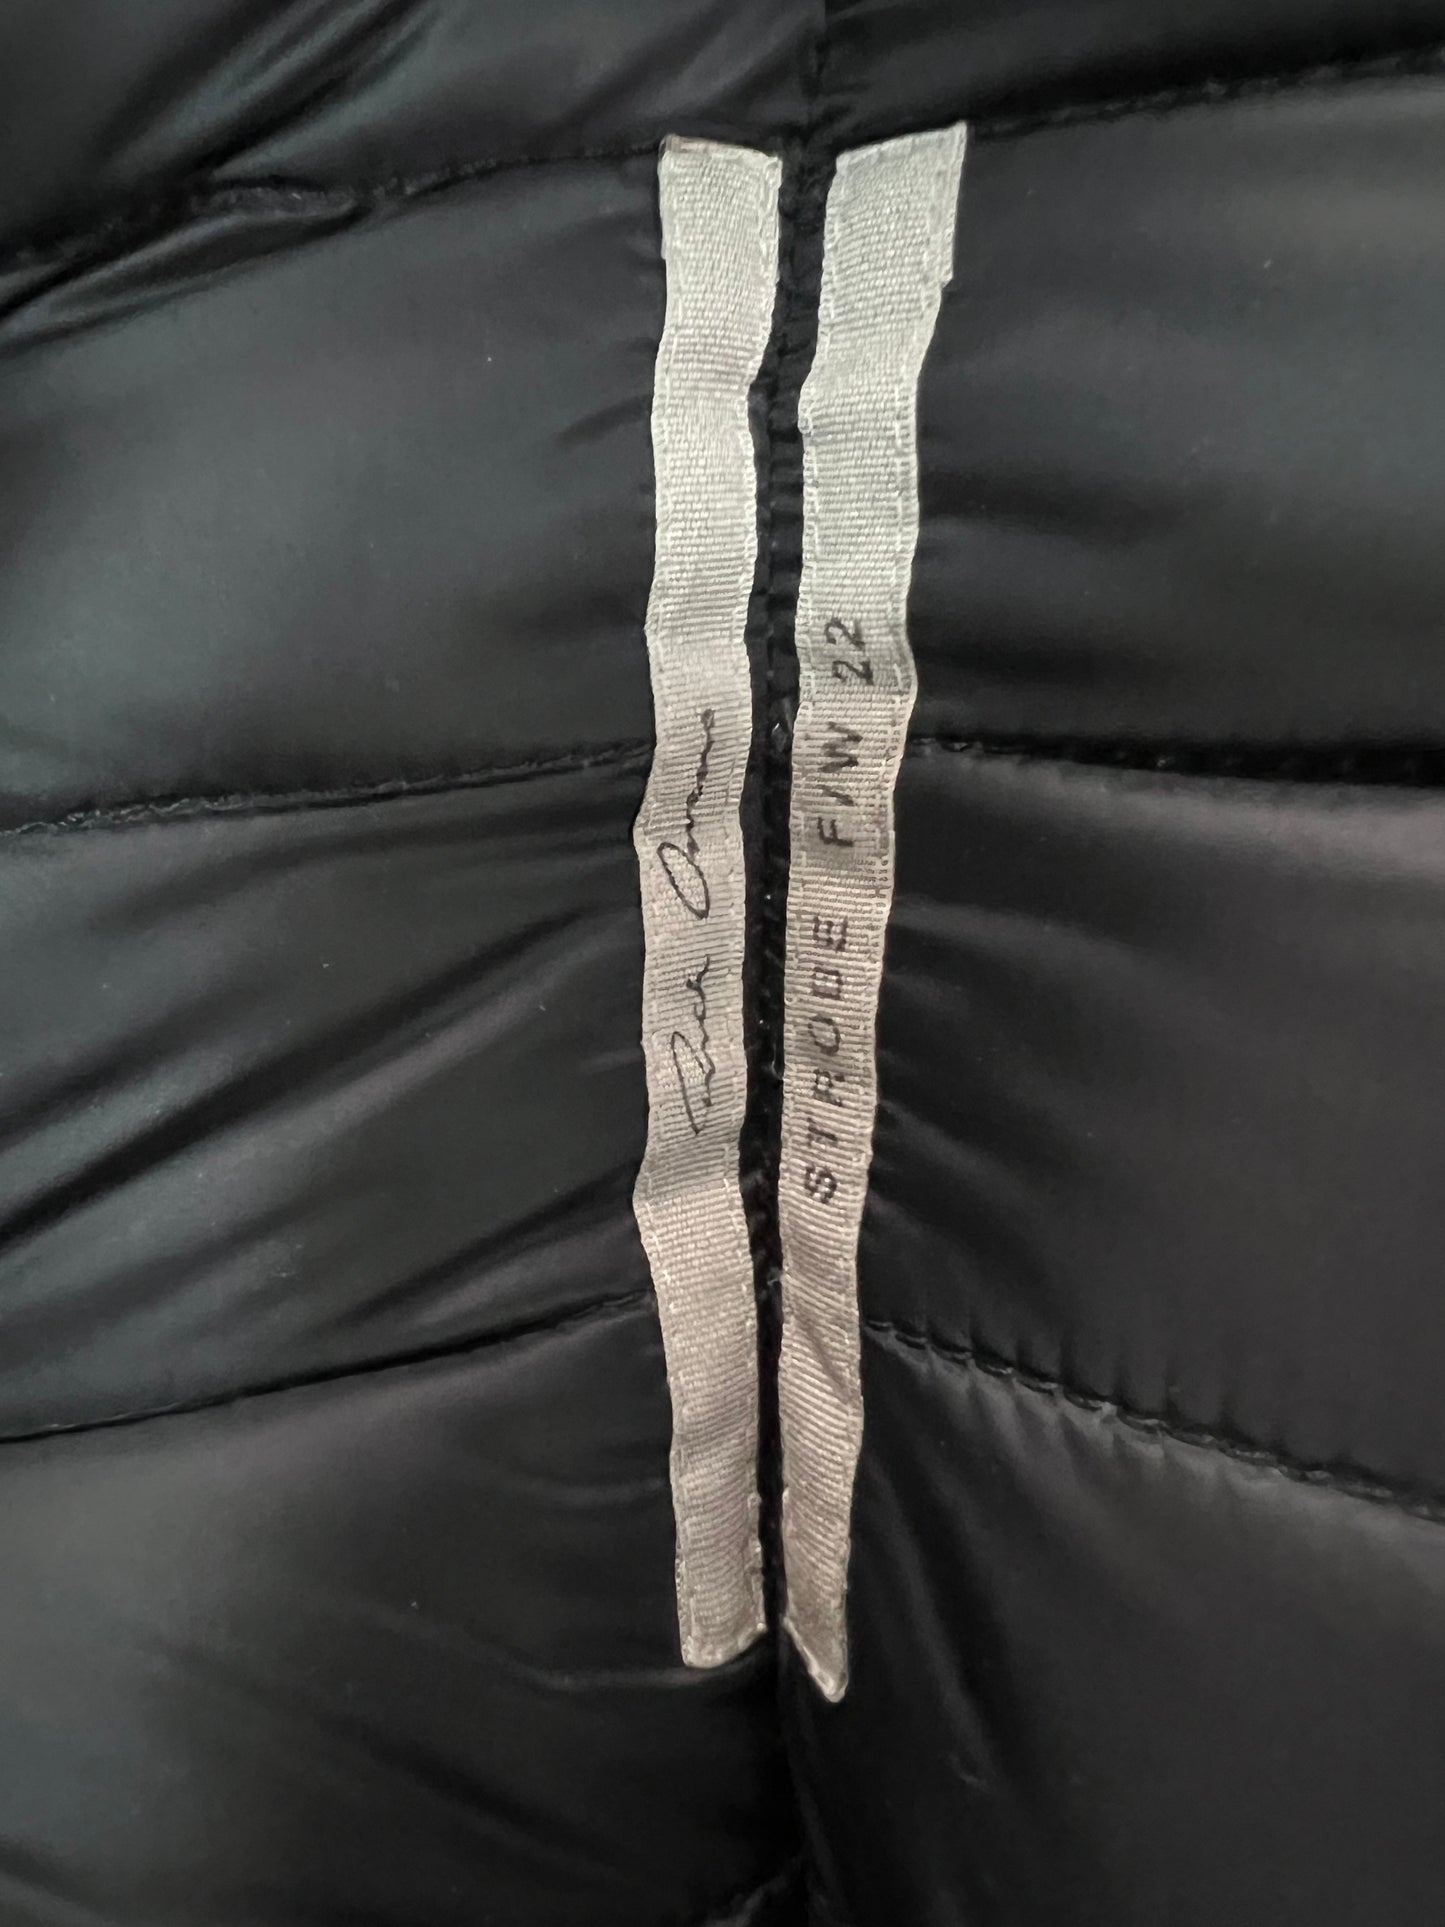 Rick Owens AW22 strobe knot leather vest Jacket in black SZ:48